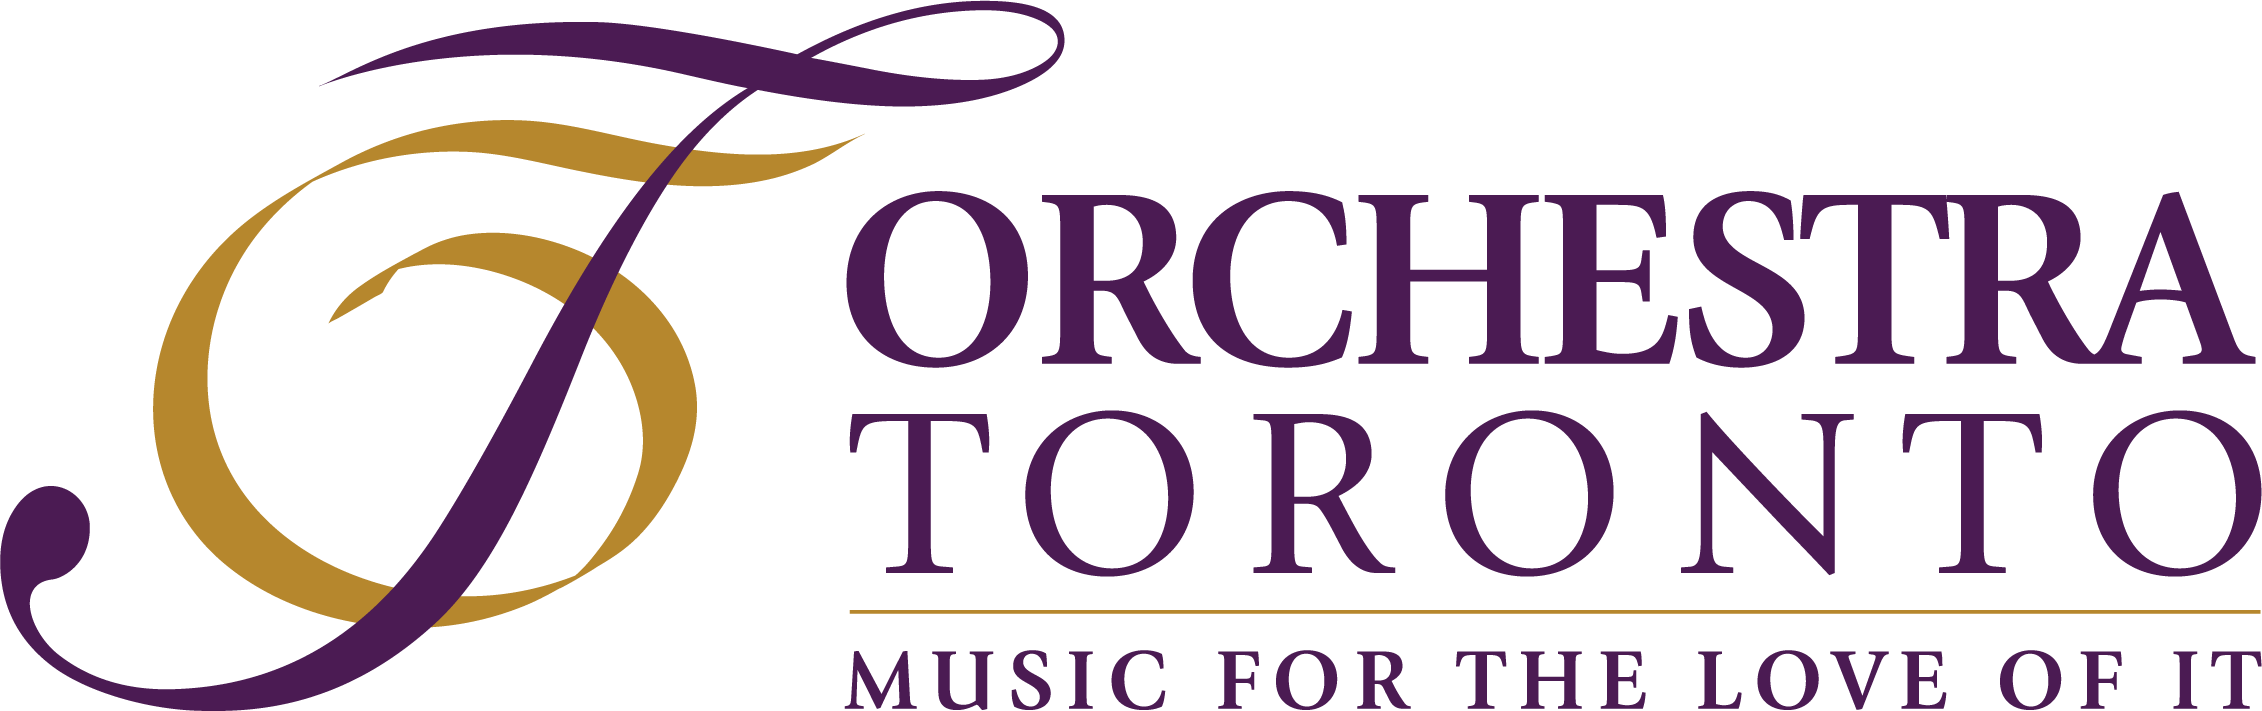 ORCHESTRA TORONTO logo